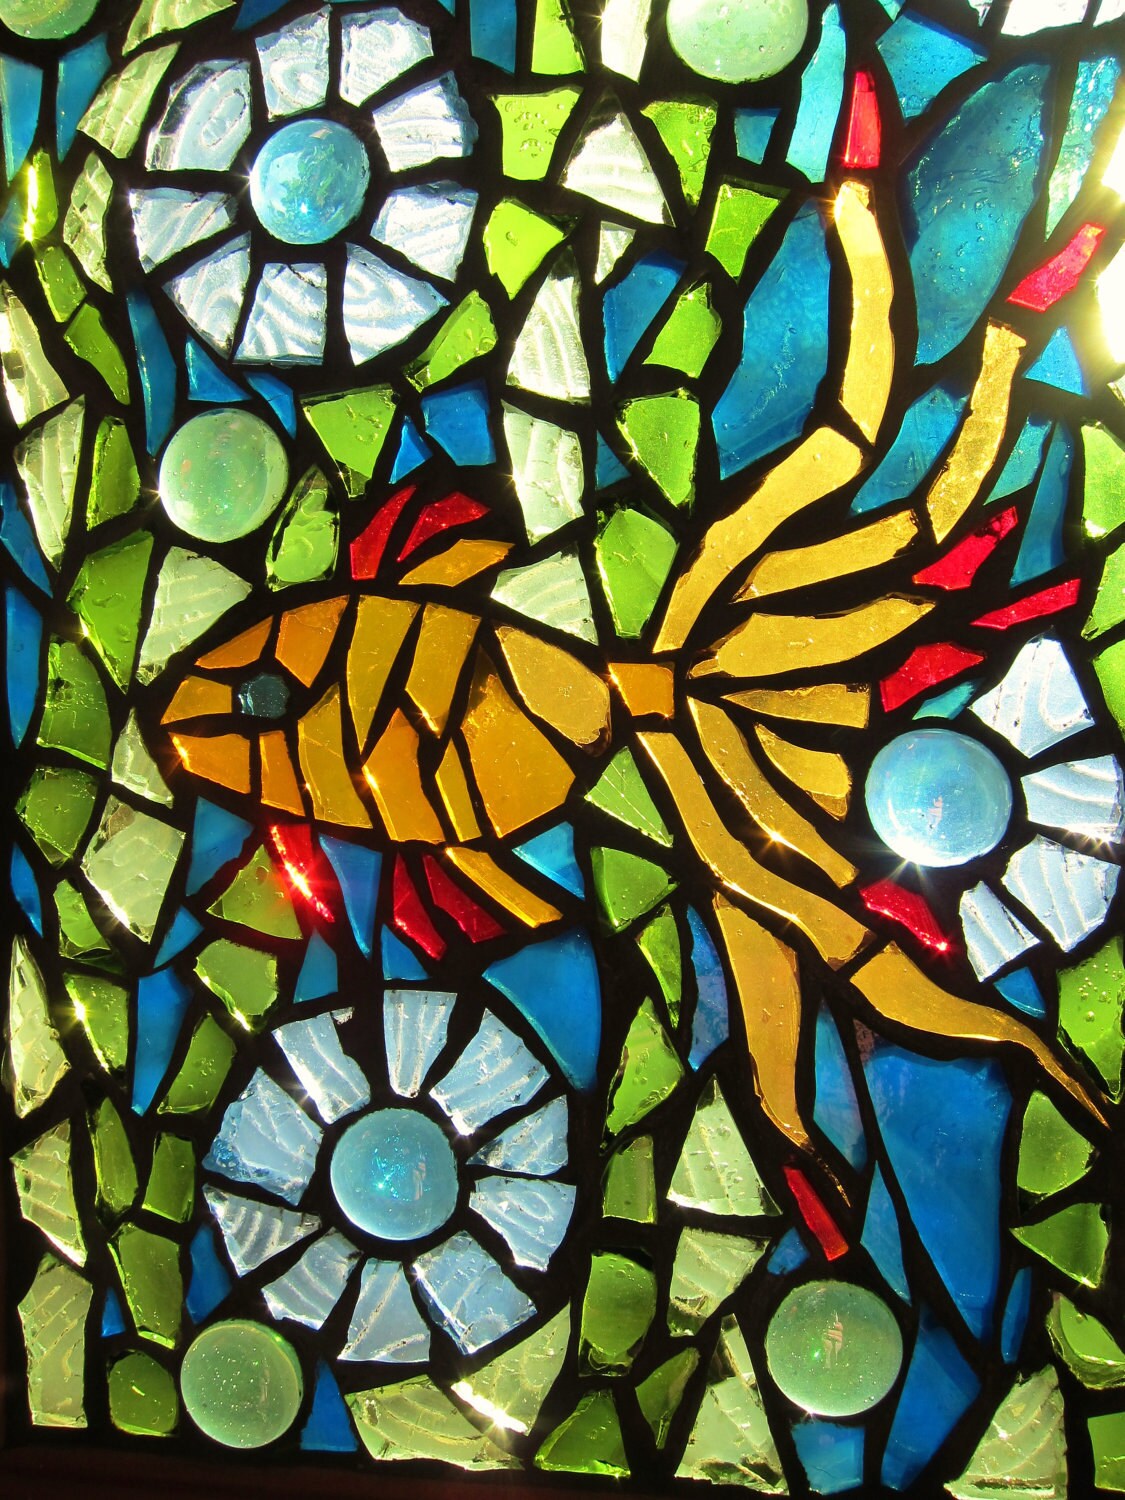 Mosaic Window Art